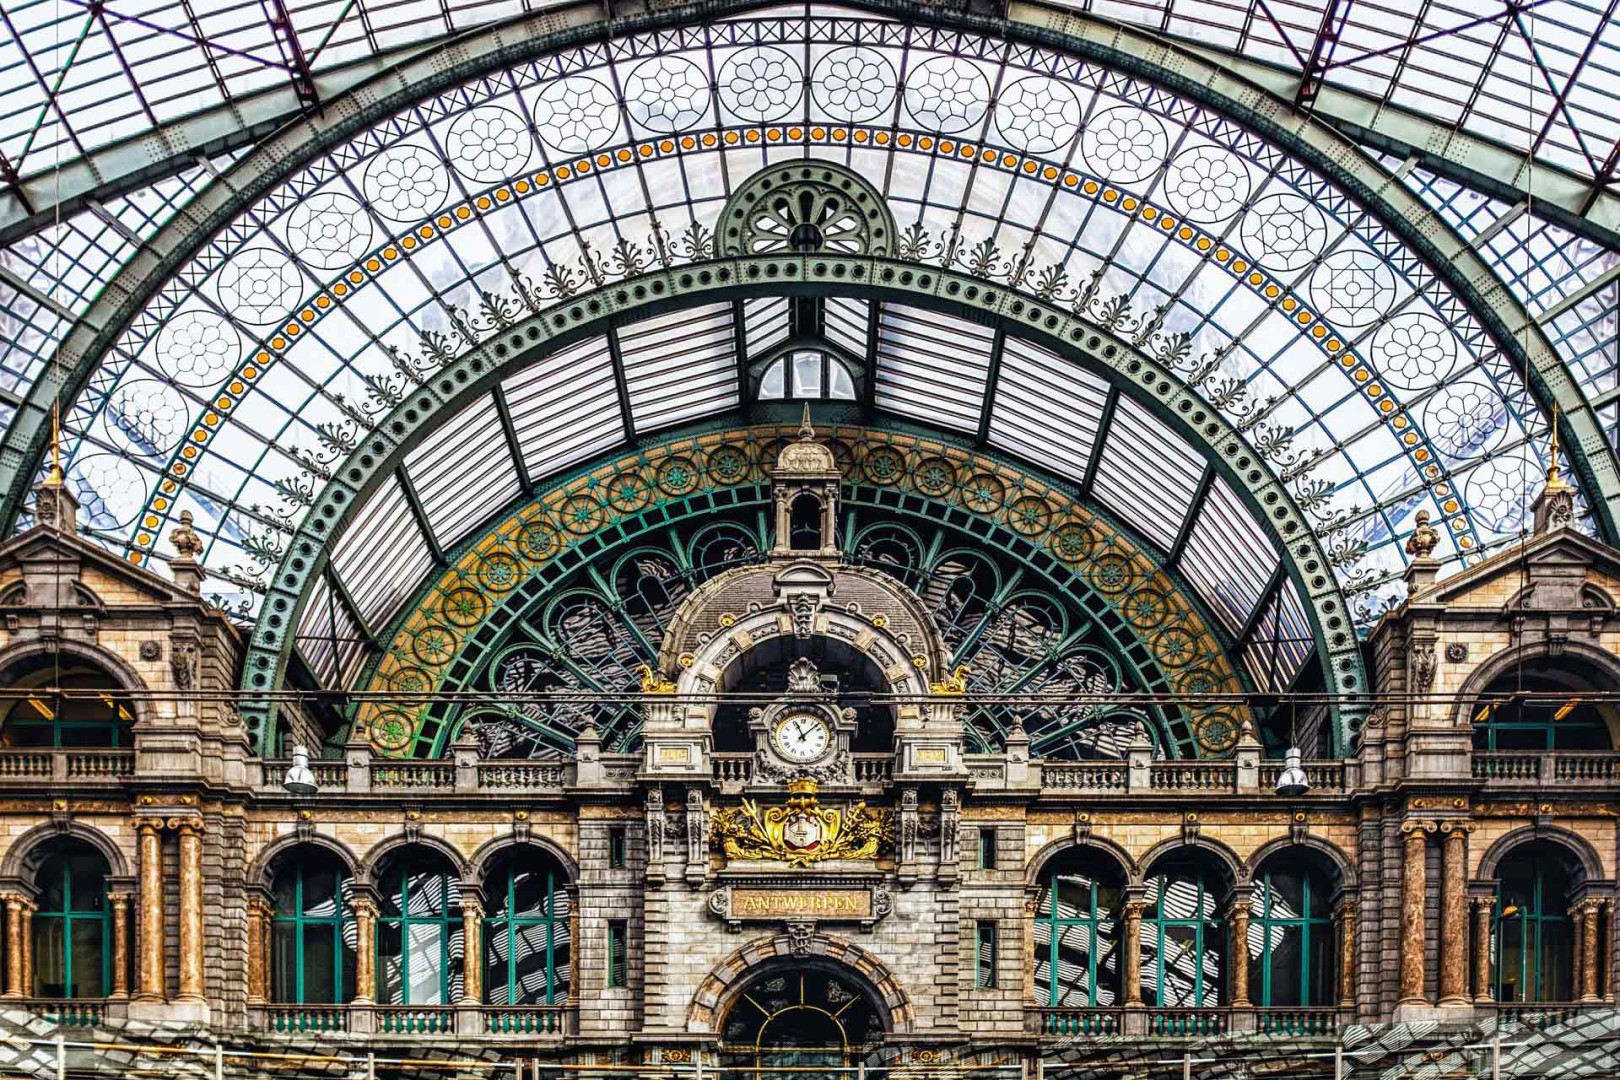 Antwerp train station clock tower Antwerp Belgium